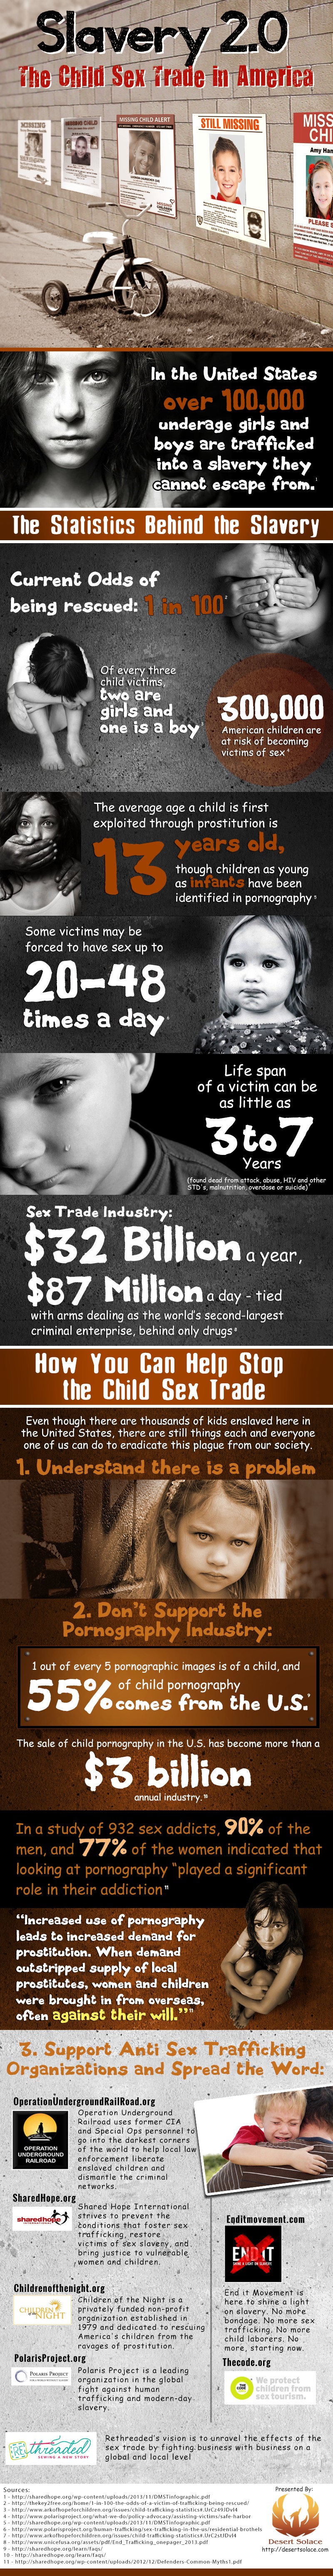 child-sex-trade-infographic-edited